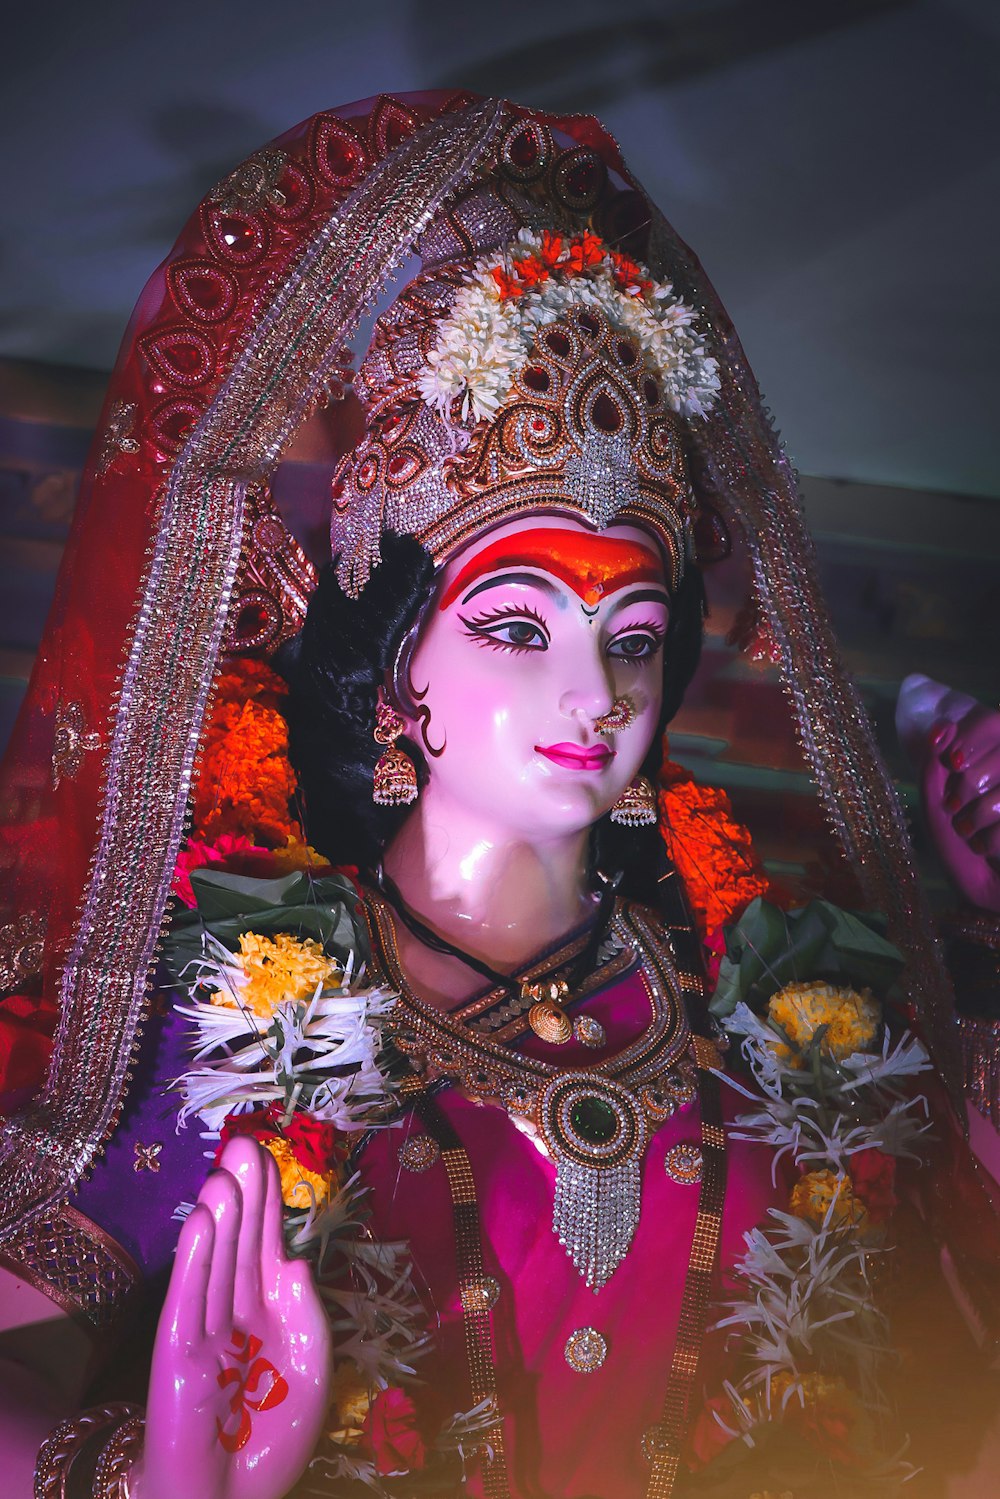 750+ Durga Pictures | Download Free Images on Unsplash